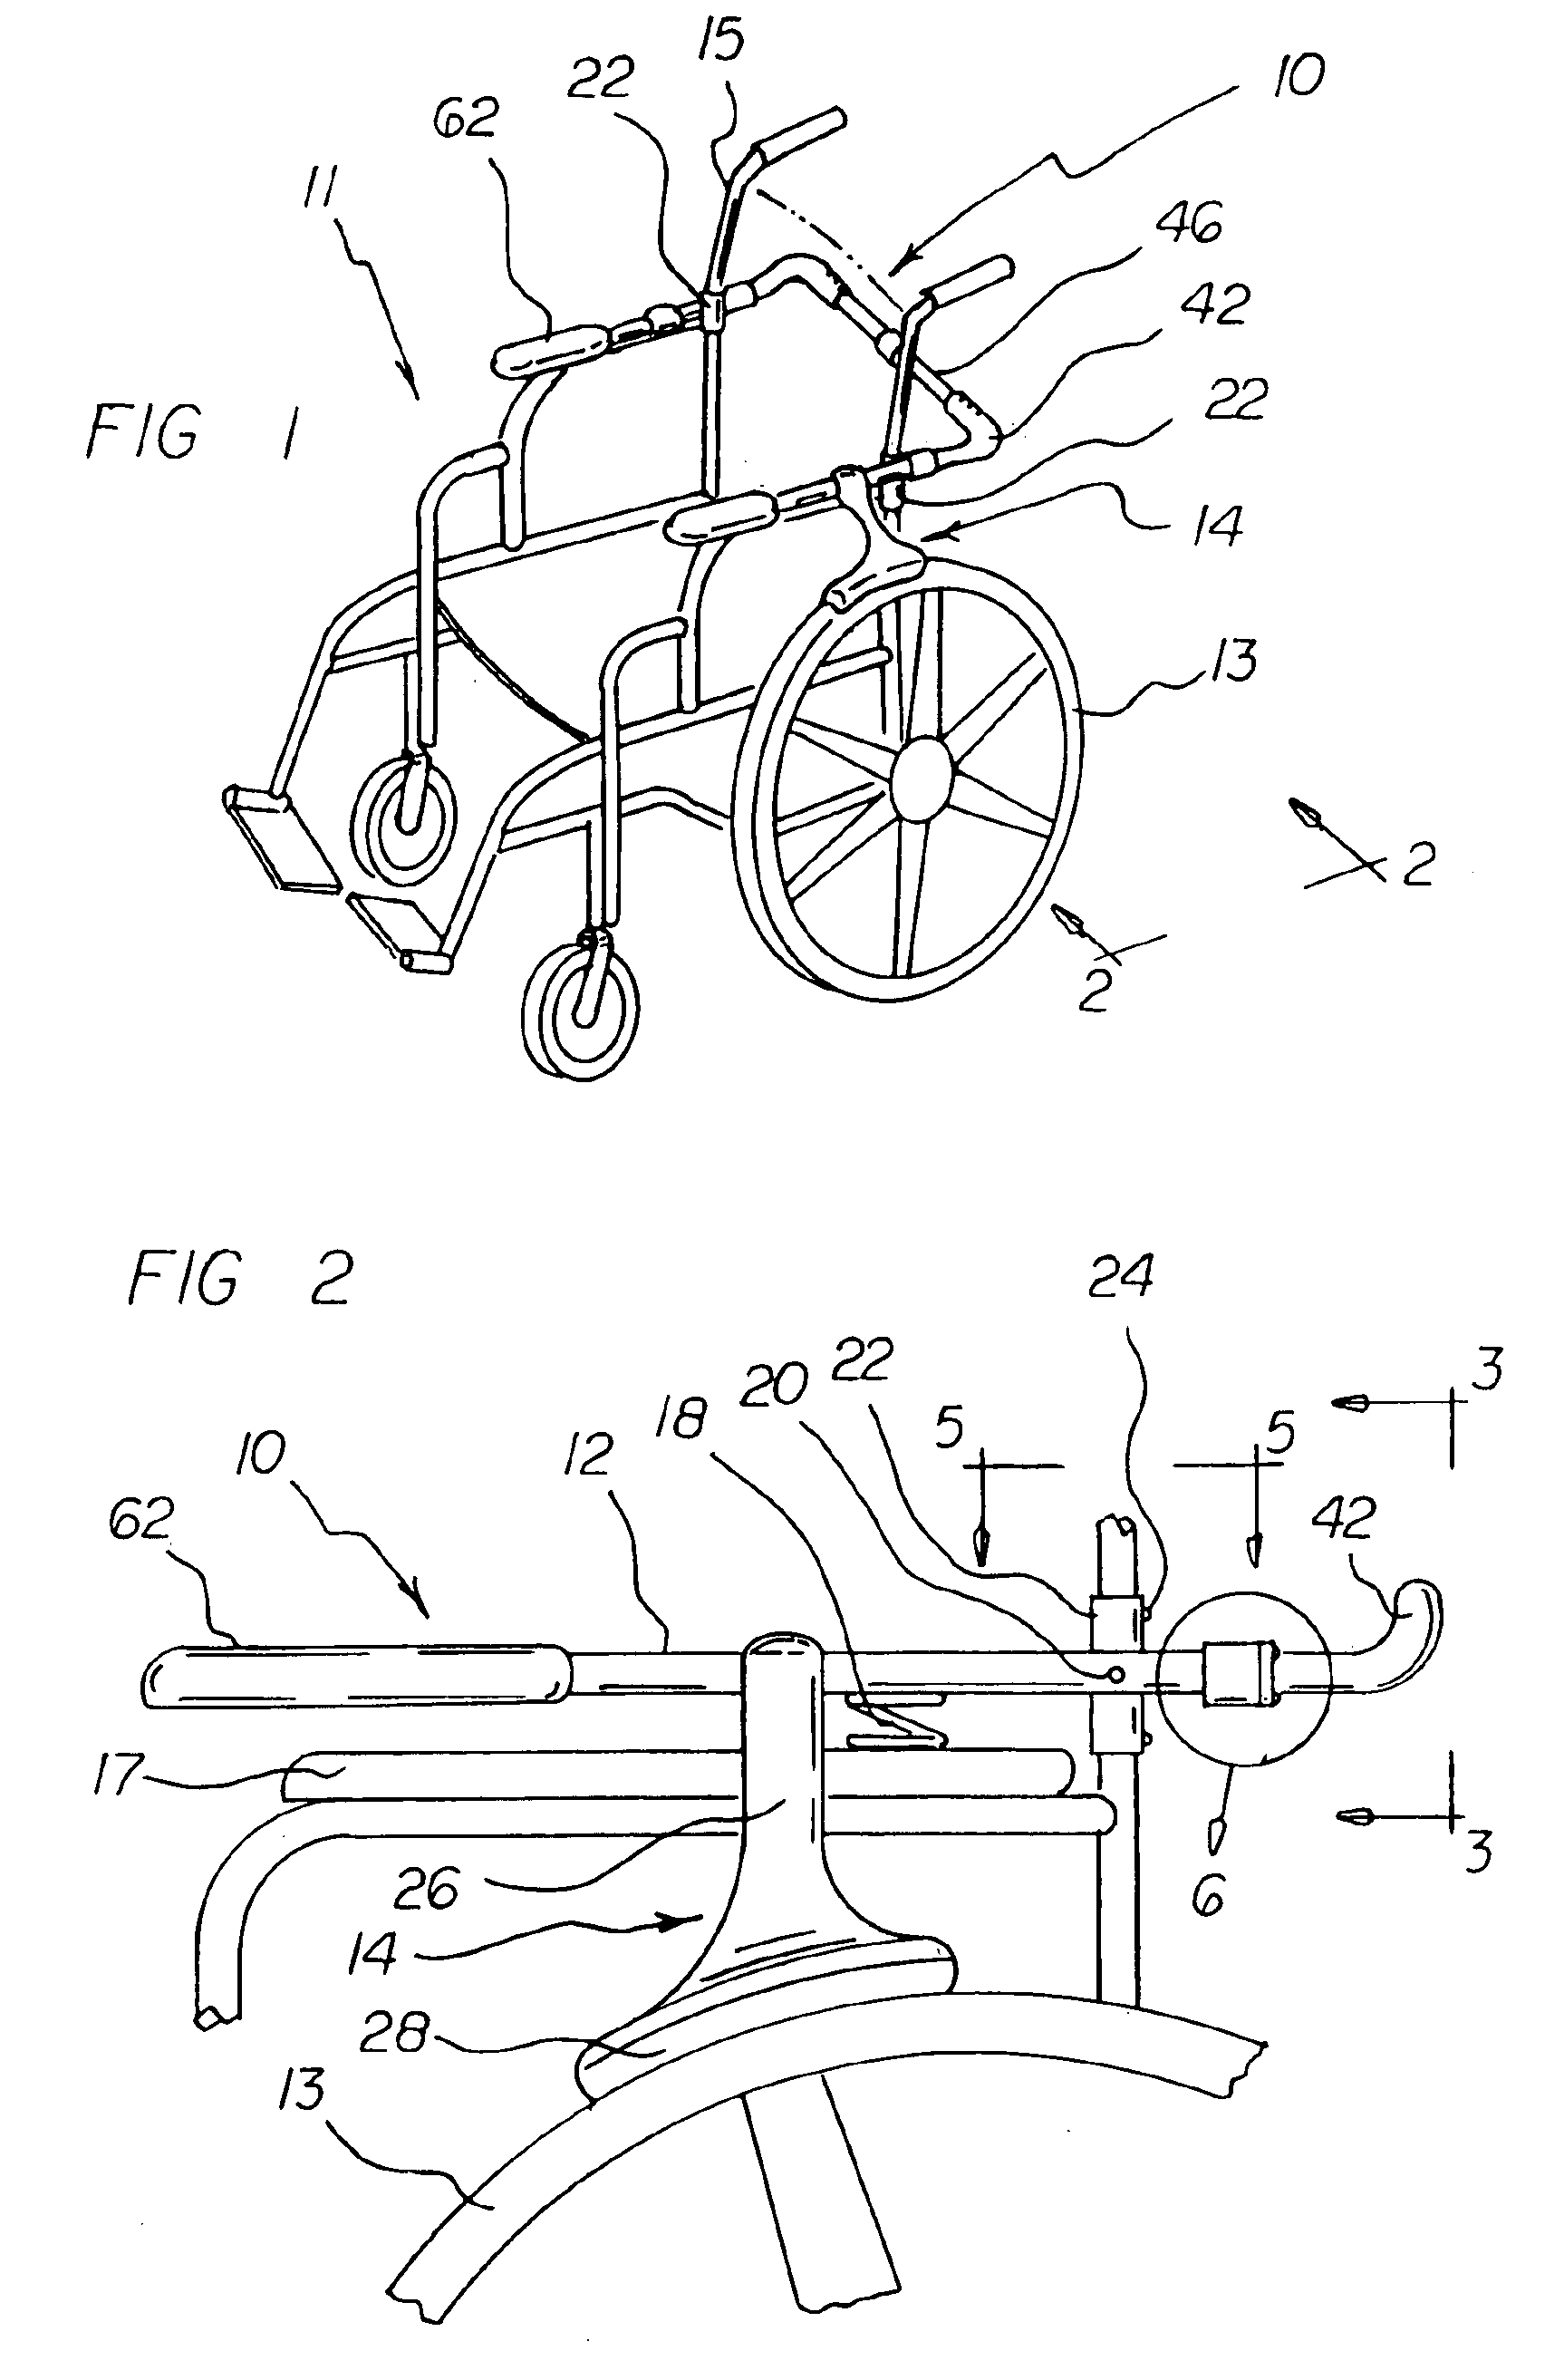 Wheelchair brake attachment apparatus